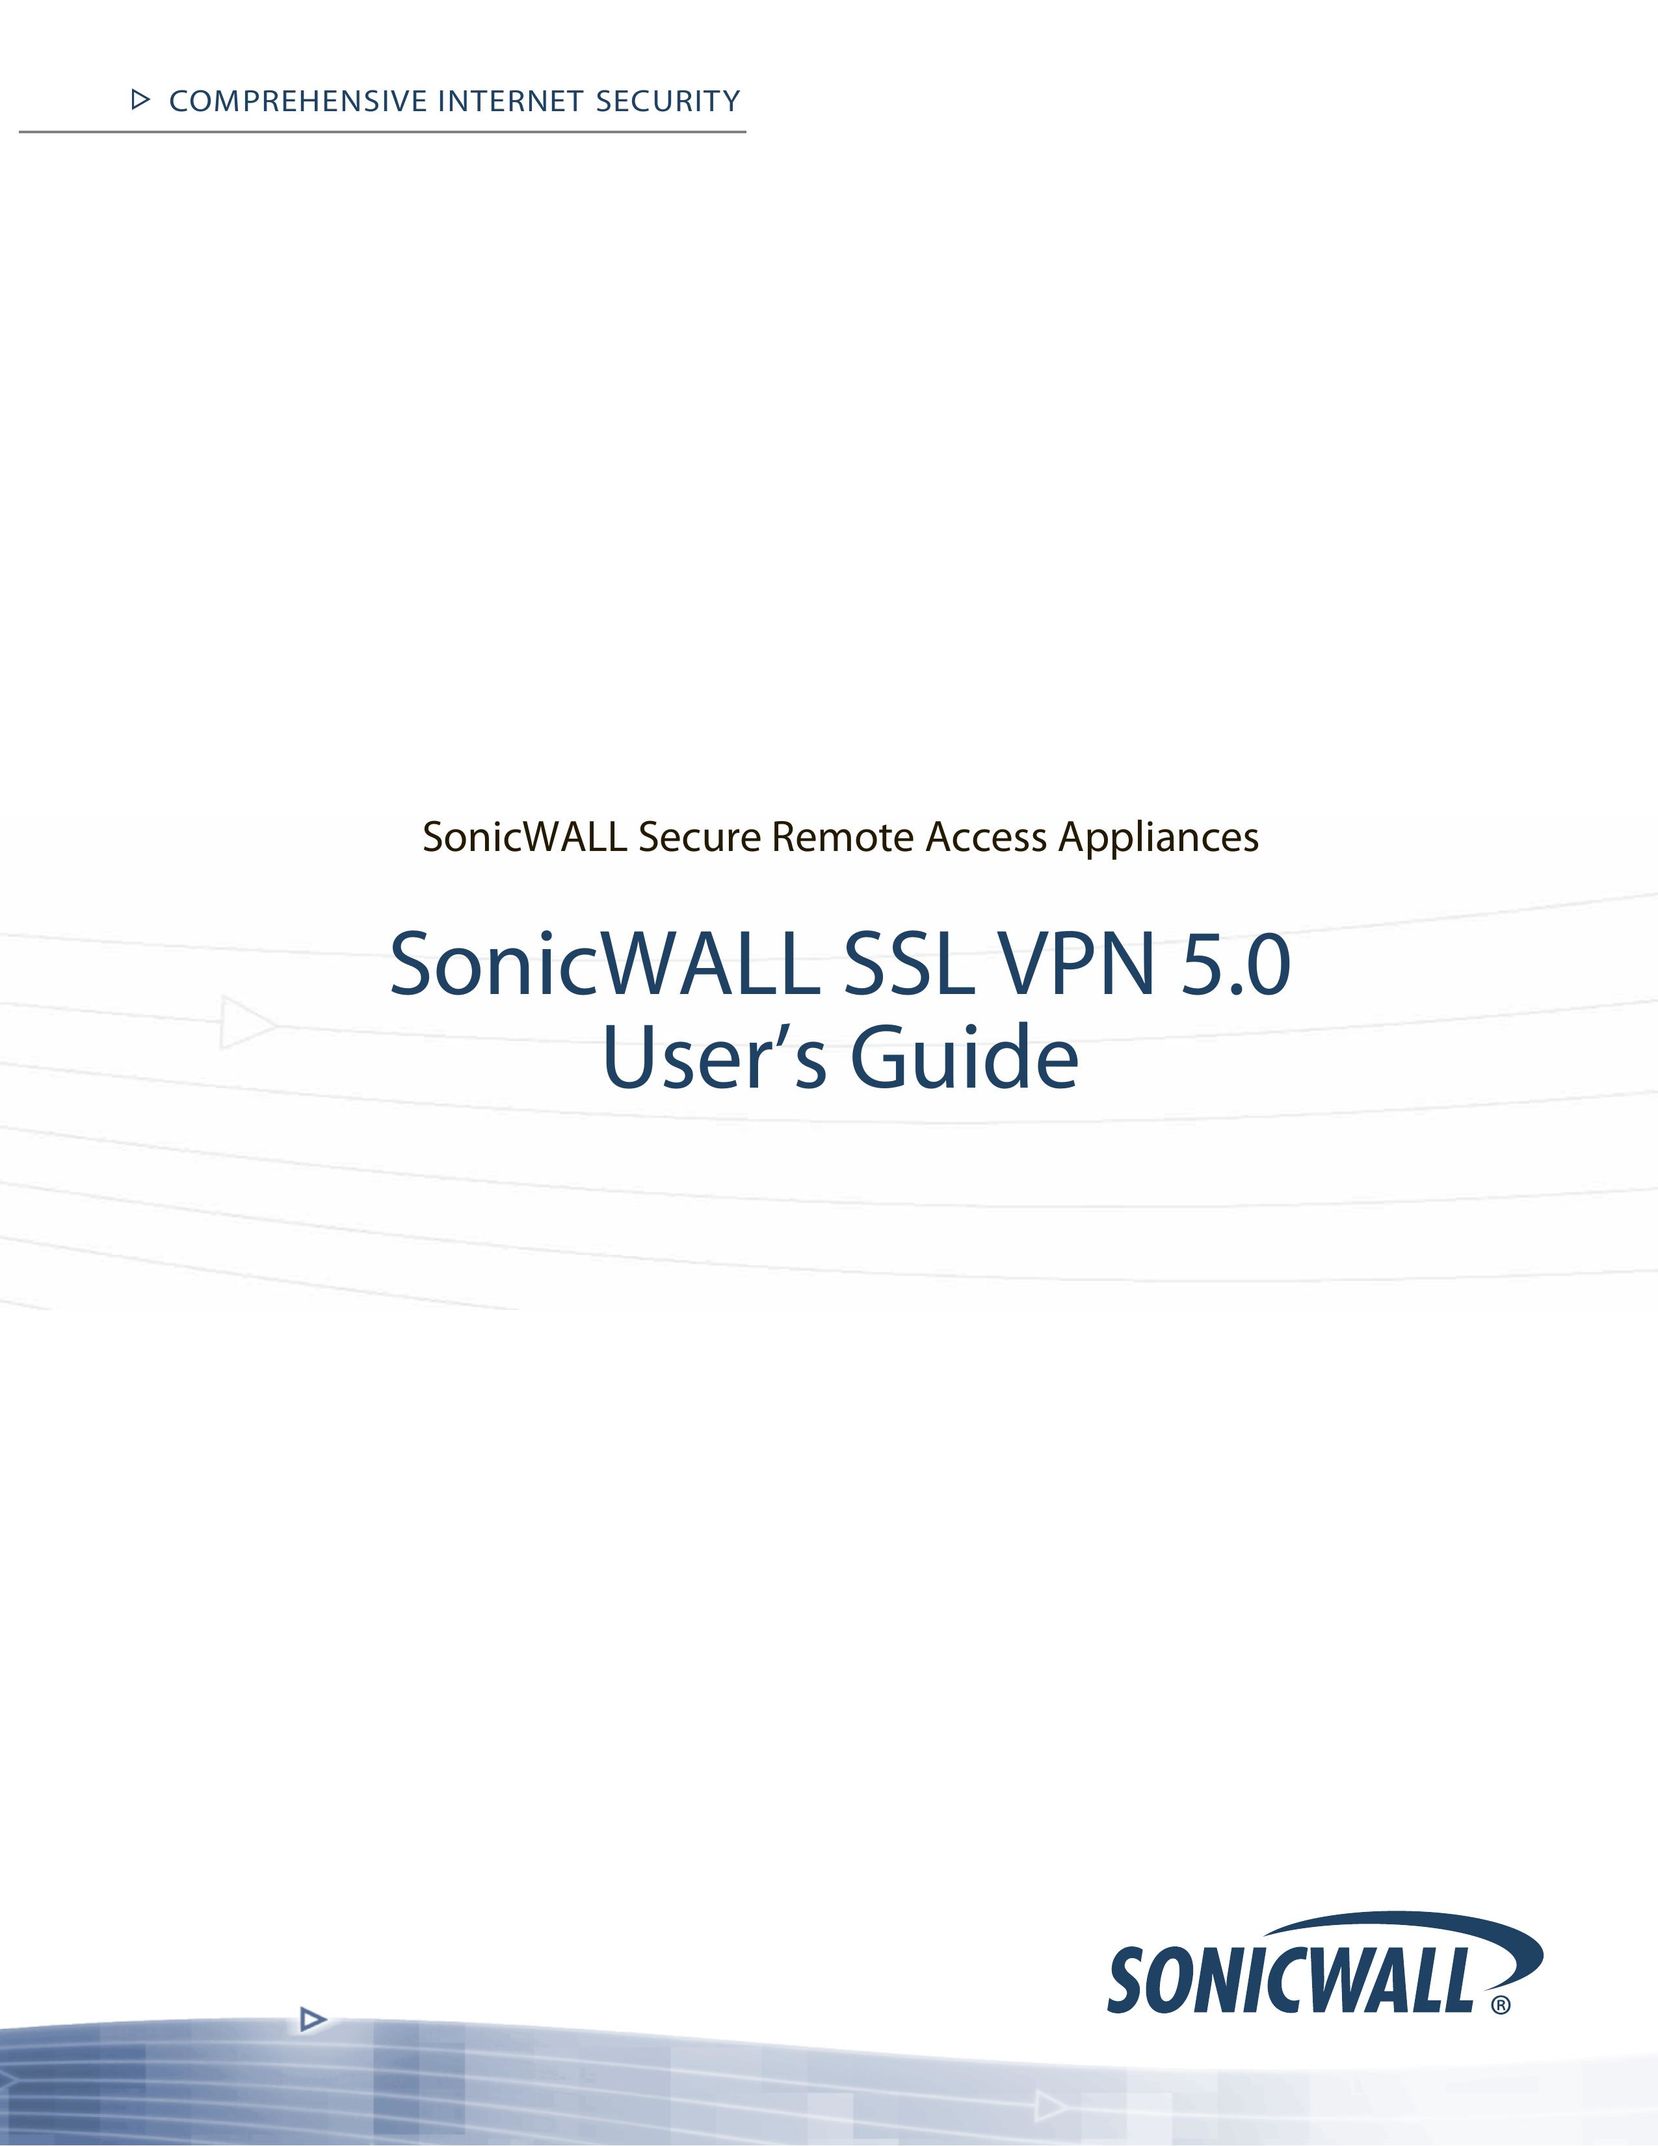 SonicWALL SSL VPN 5.0 Network Router User Manual